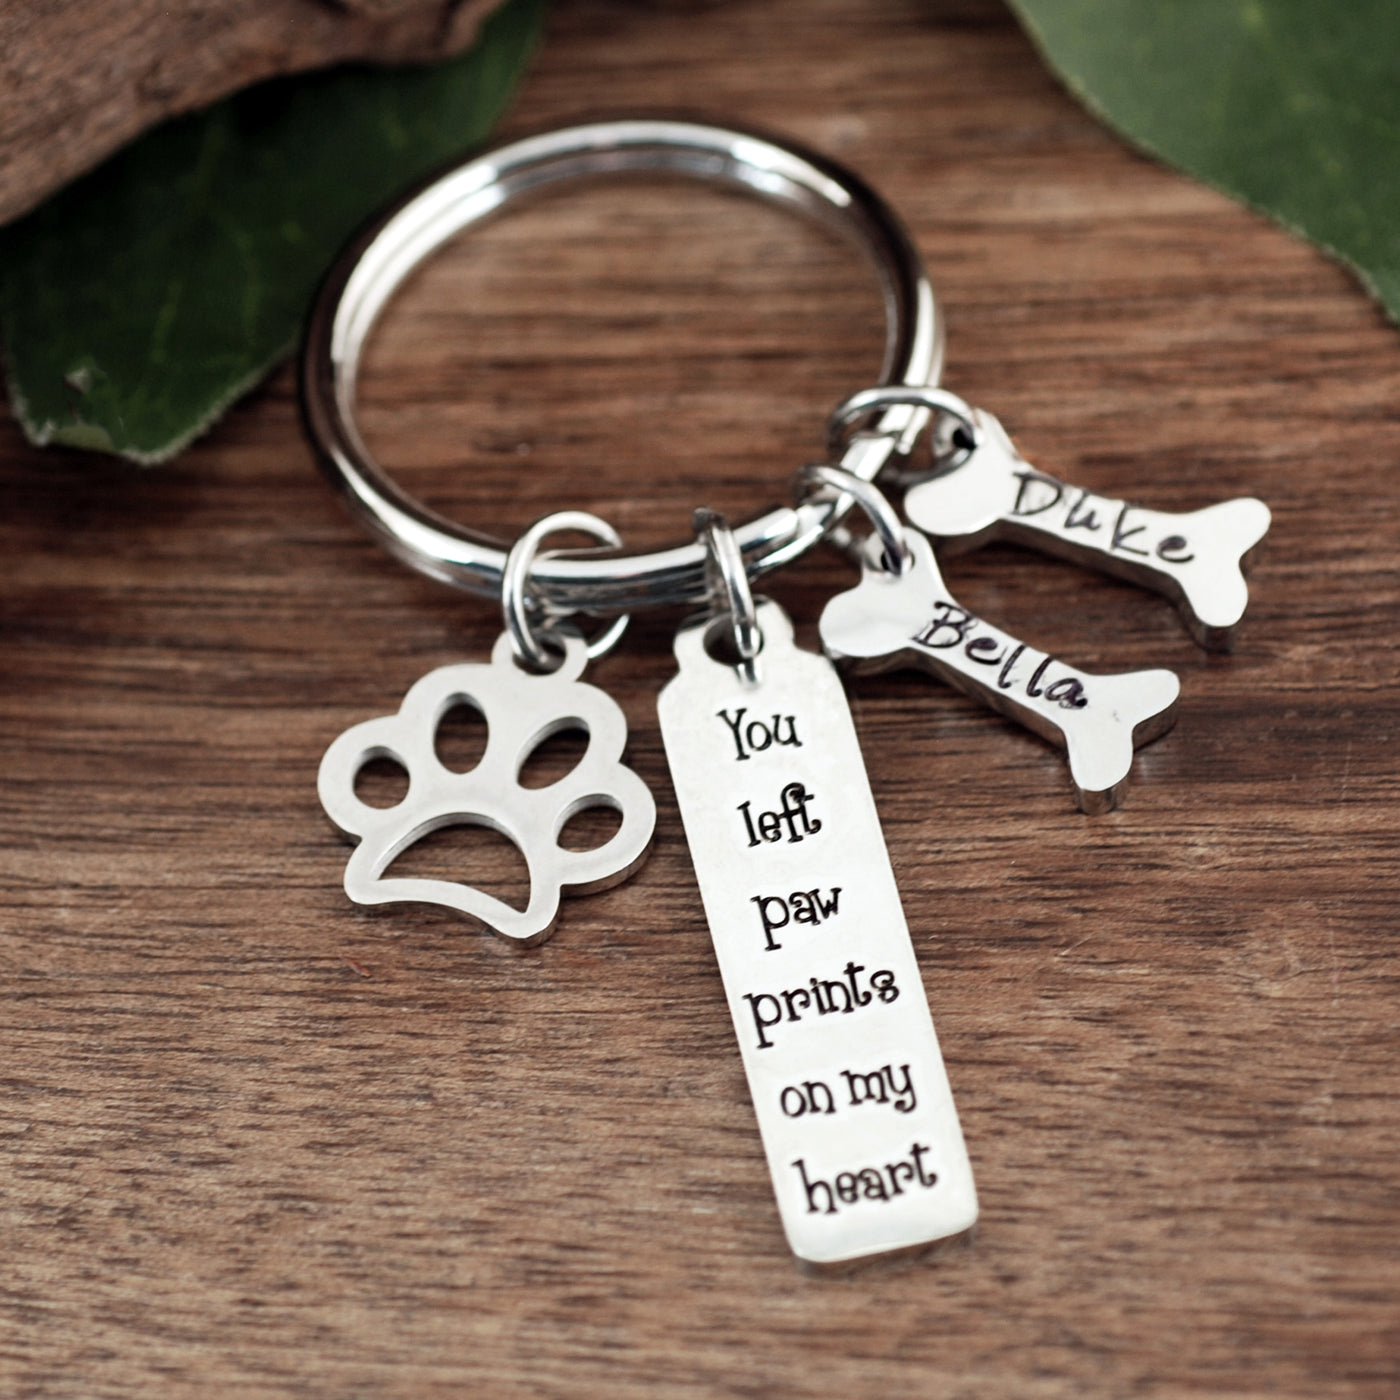 Personalized Pet Memorial Keychain with Dog Bones - Godfullness